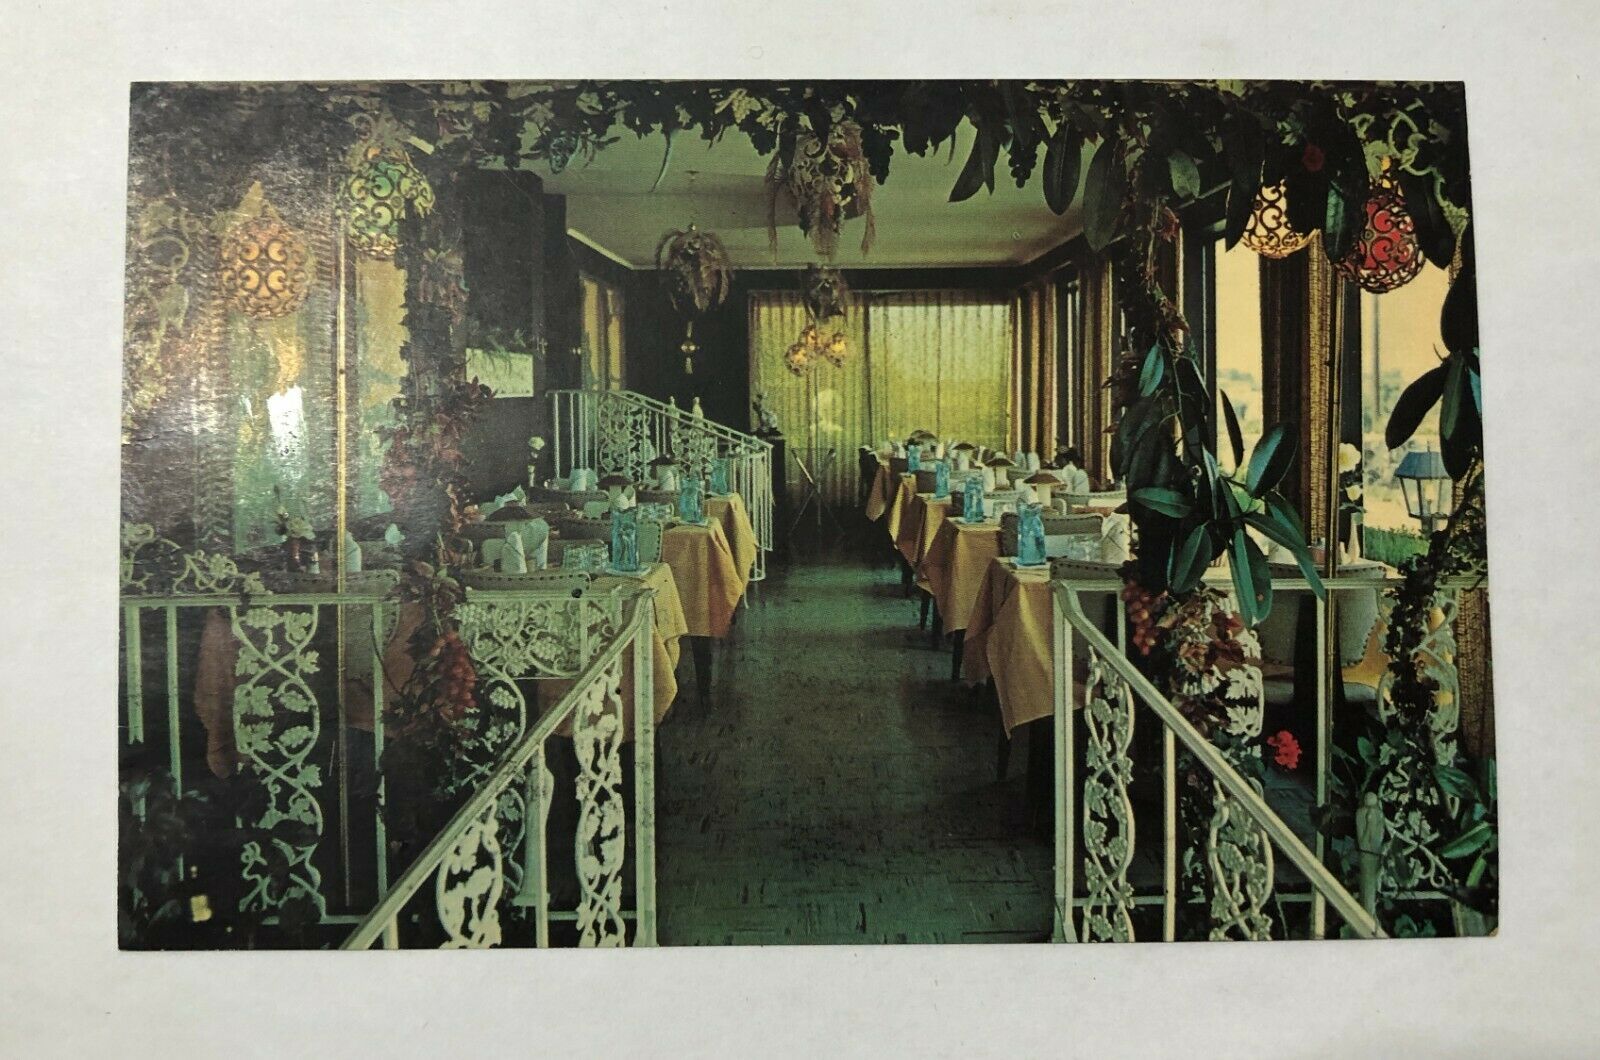 Country Gardens Restaurant Tupelo Mississippi - Unused 1950s Vintage Postcard - $6.88